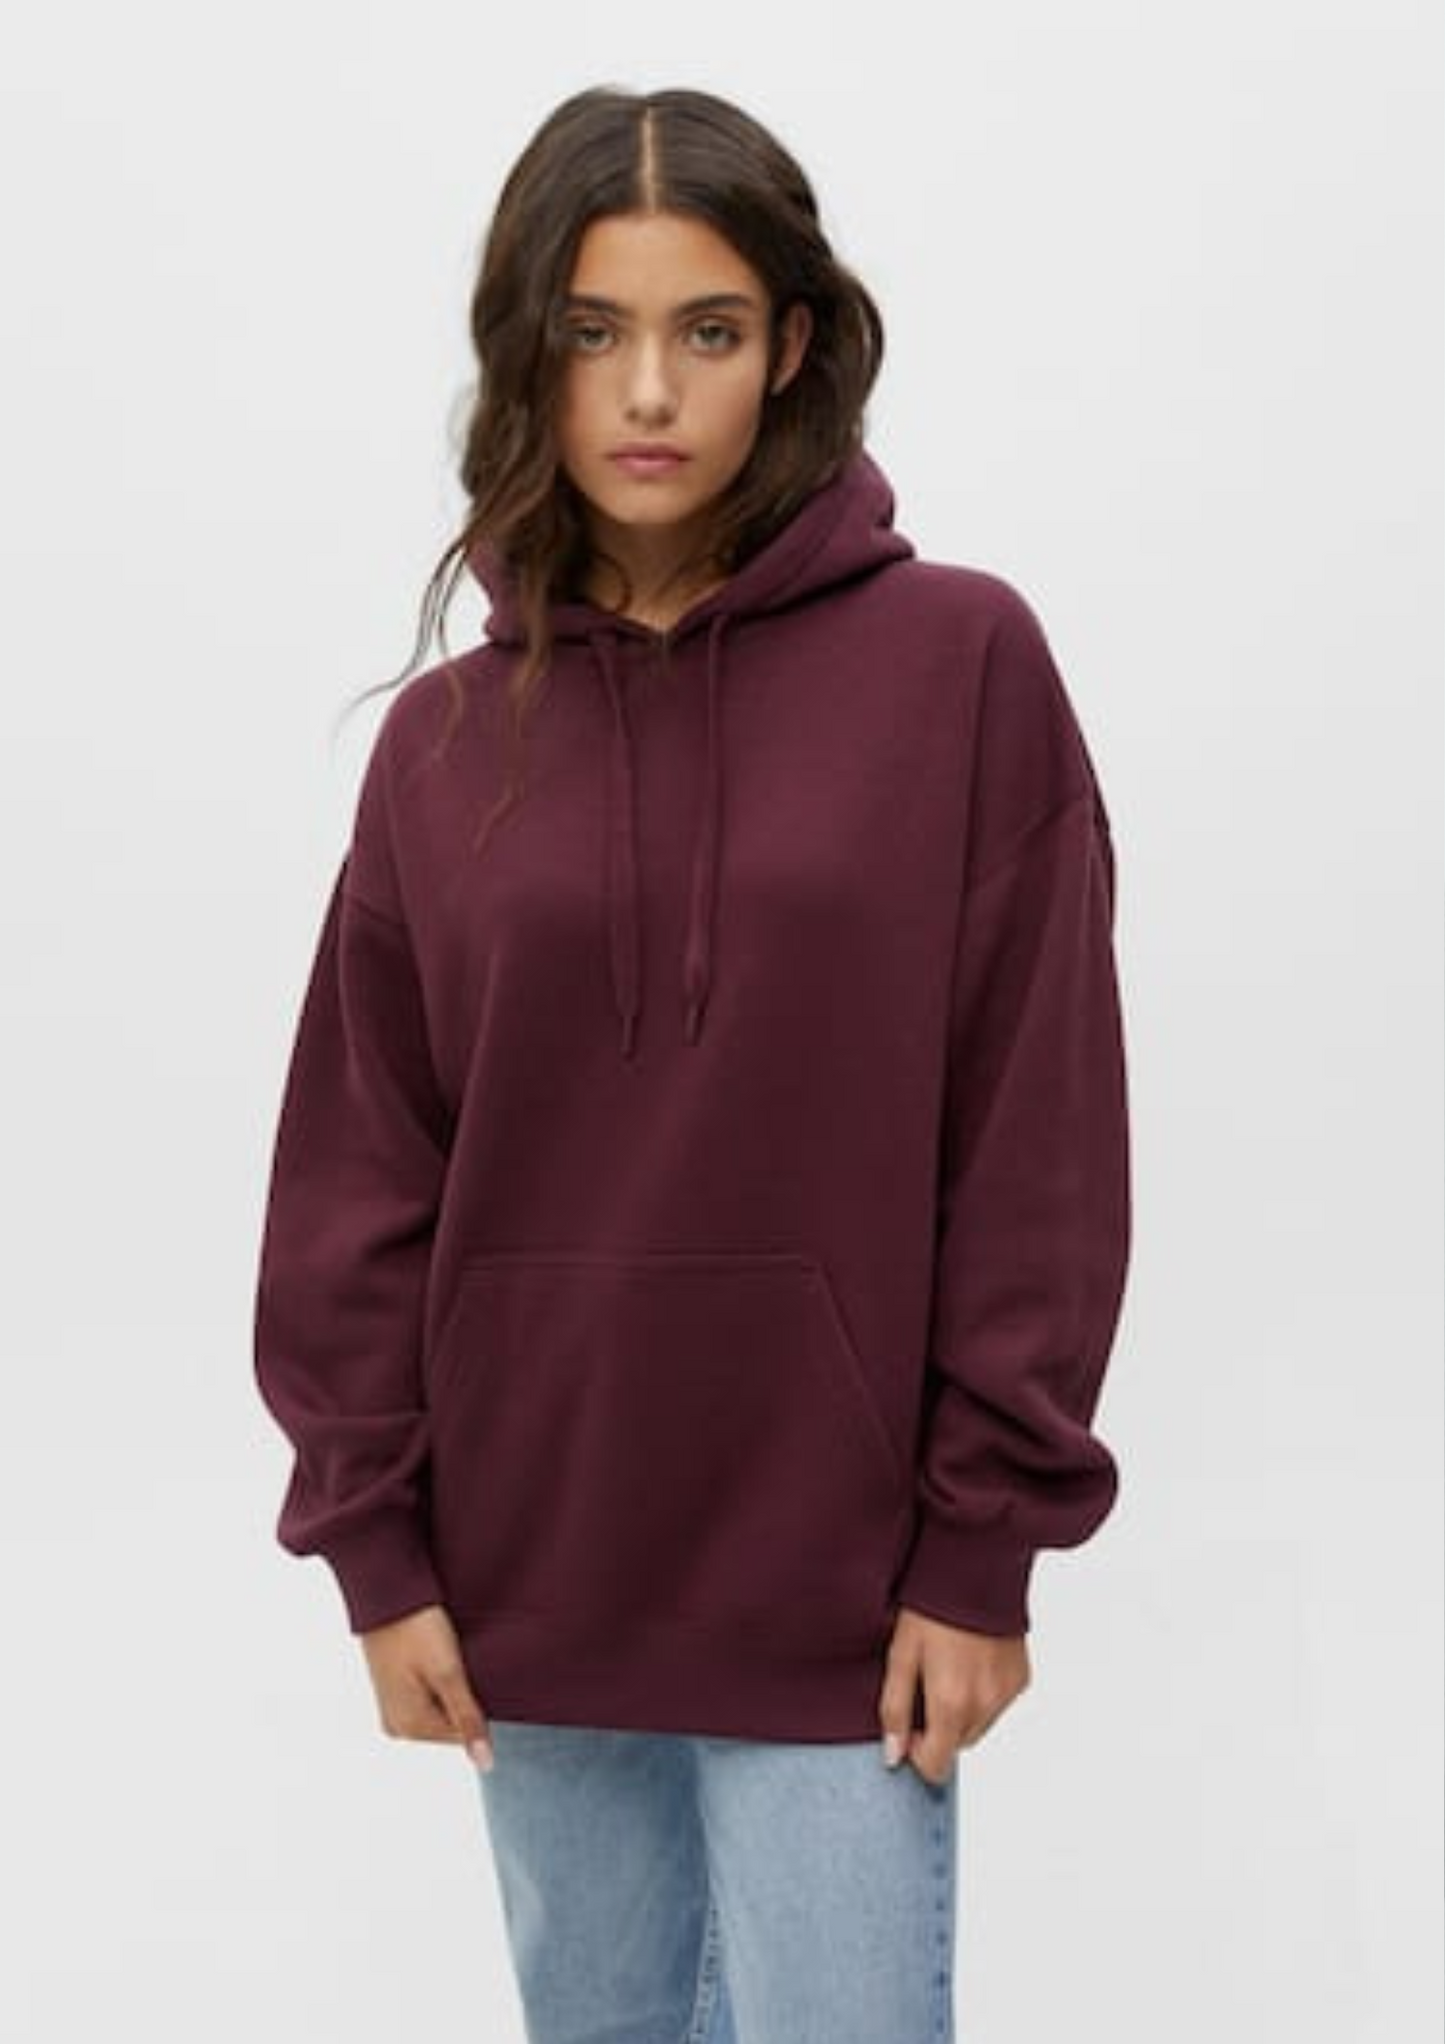 Sweatshirt oversize com capuz